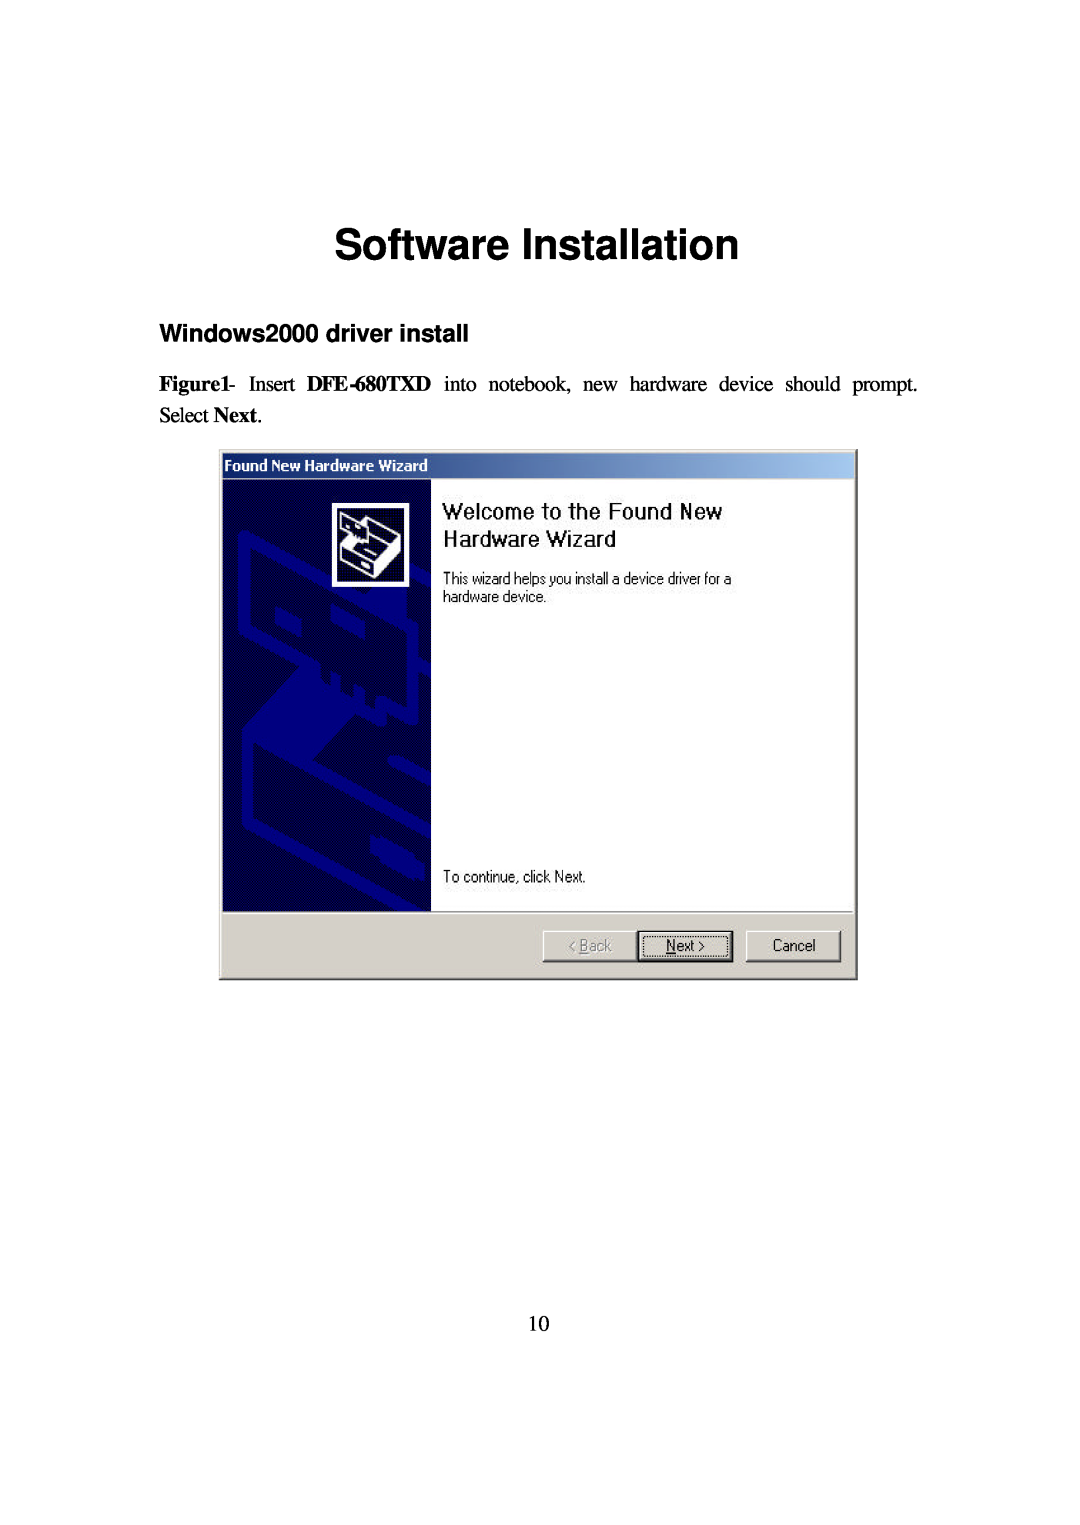 D-Link DFE-680TXD manual Software Installation, Windows2000 driver install 